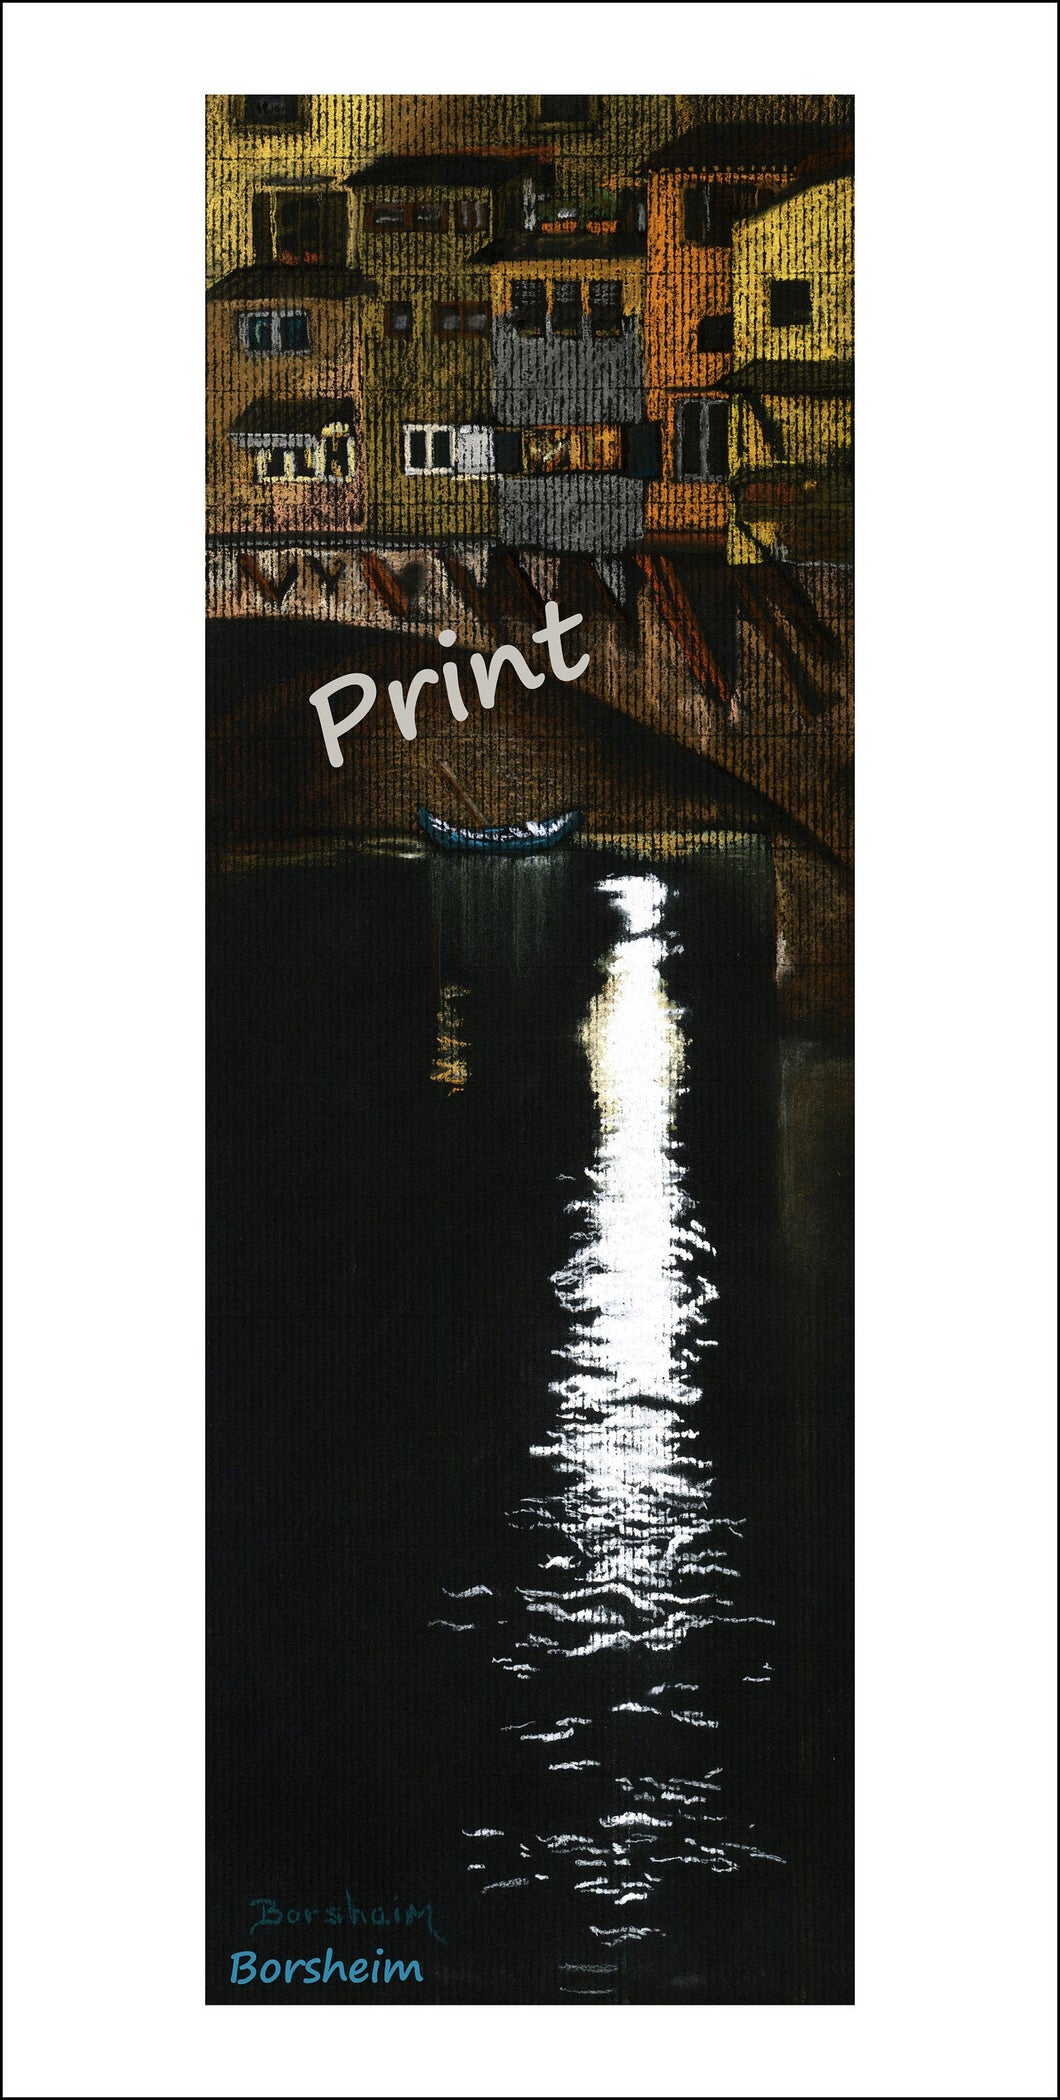 Dark Arno Florence Italy River Boat Under Bridge Water Night Scene Reflection - Fine Art PRINT reproduction